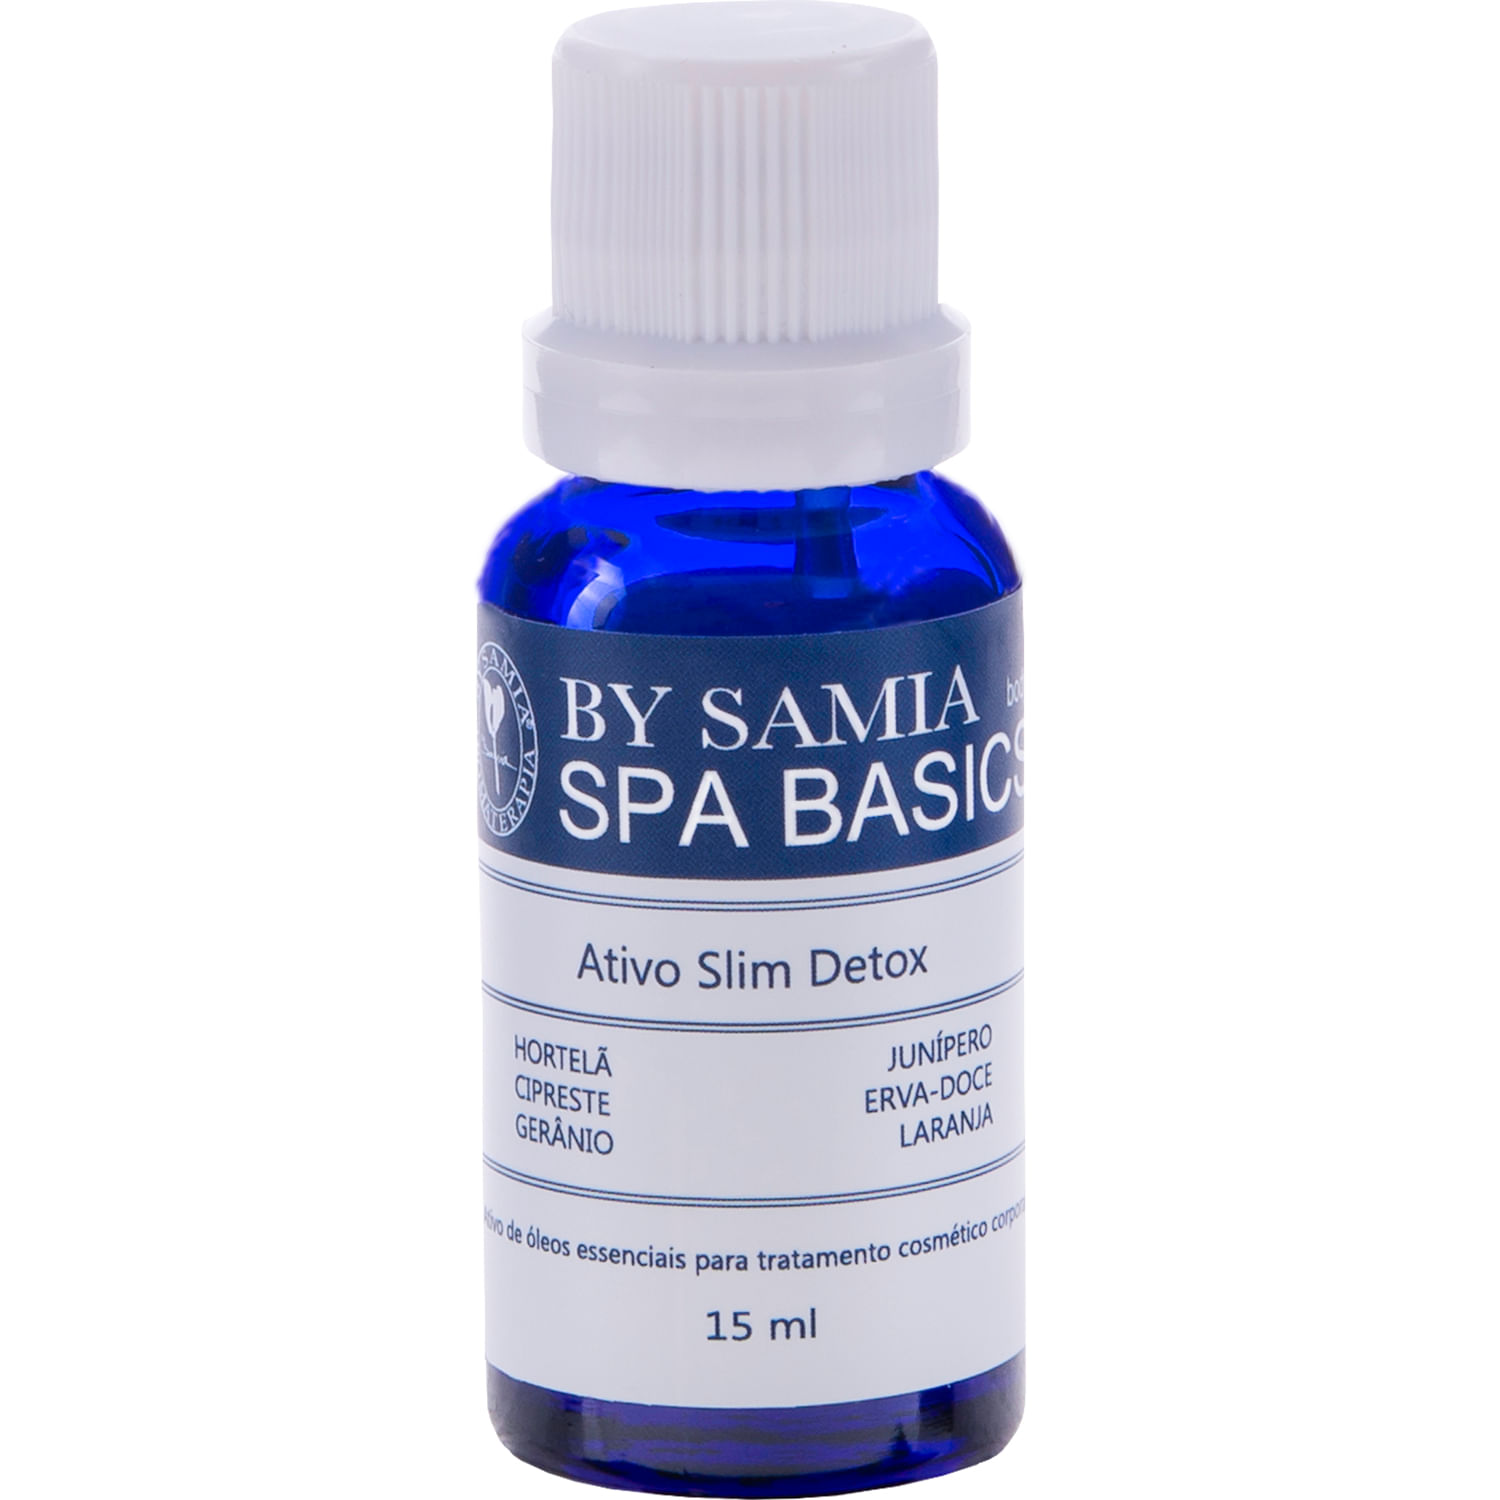 spa-basic-slim-ativo-sinergia-blend-emagrecimento-detox-reducao-peso-e-medida-oleo-essencial-bysamia-aromaterapia